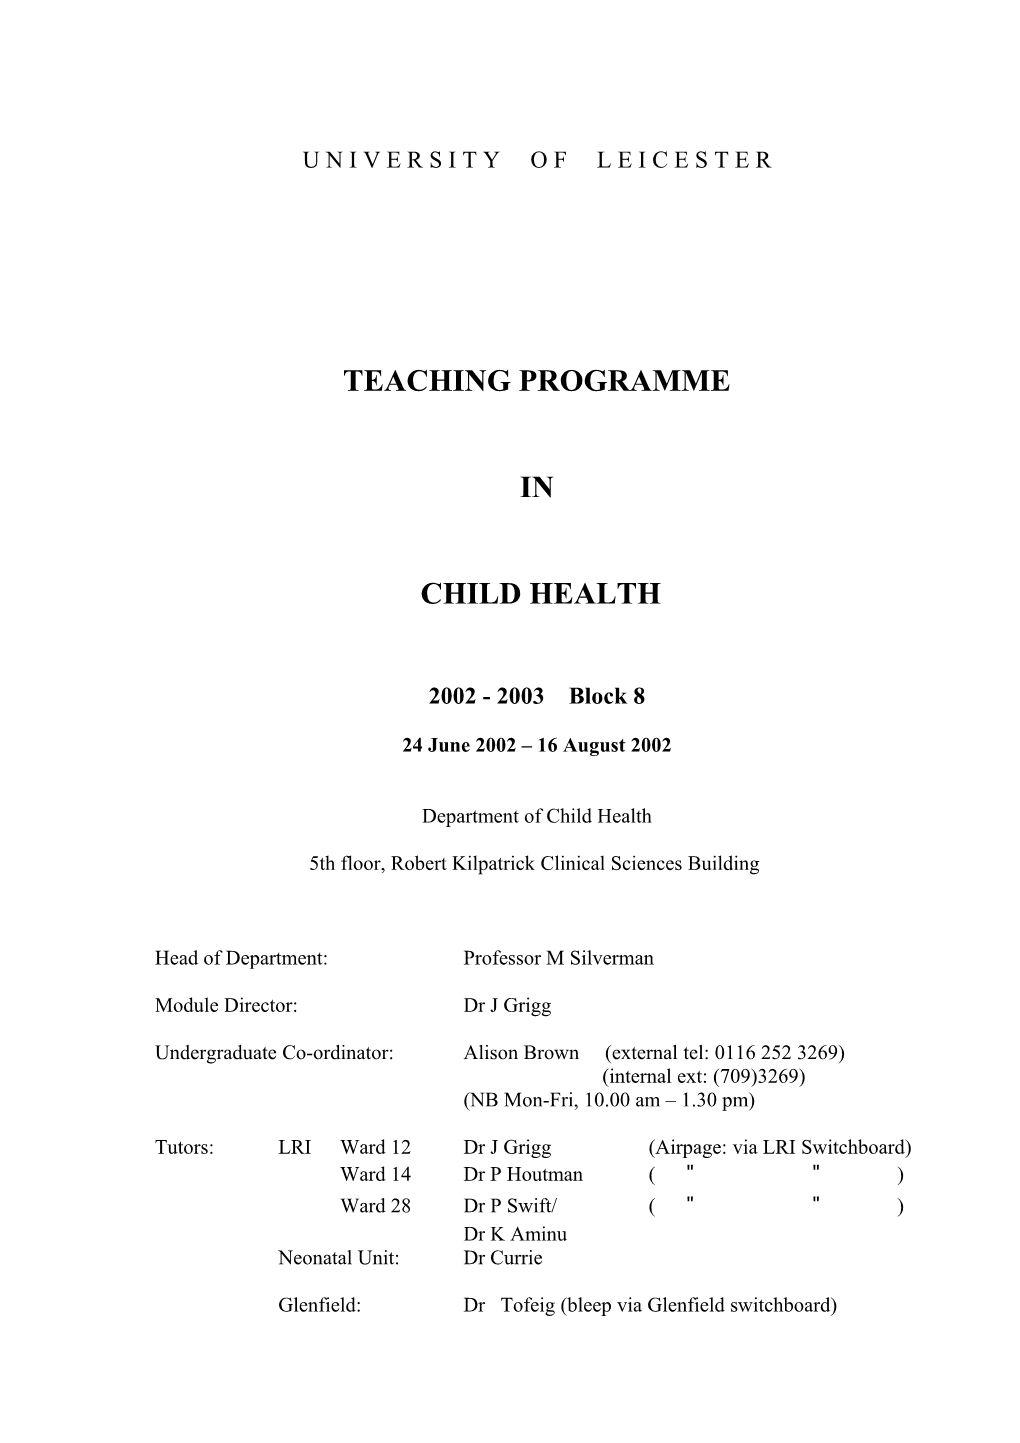 Child Health Undergraduate Teaching Programme